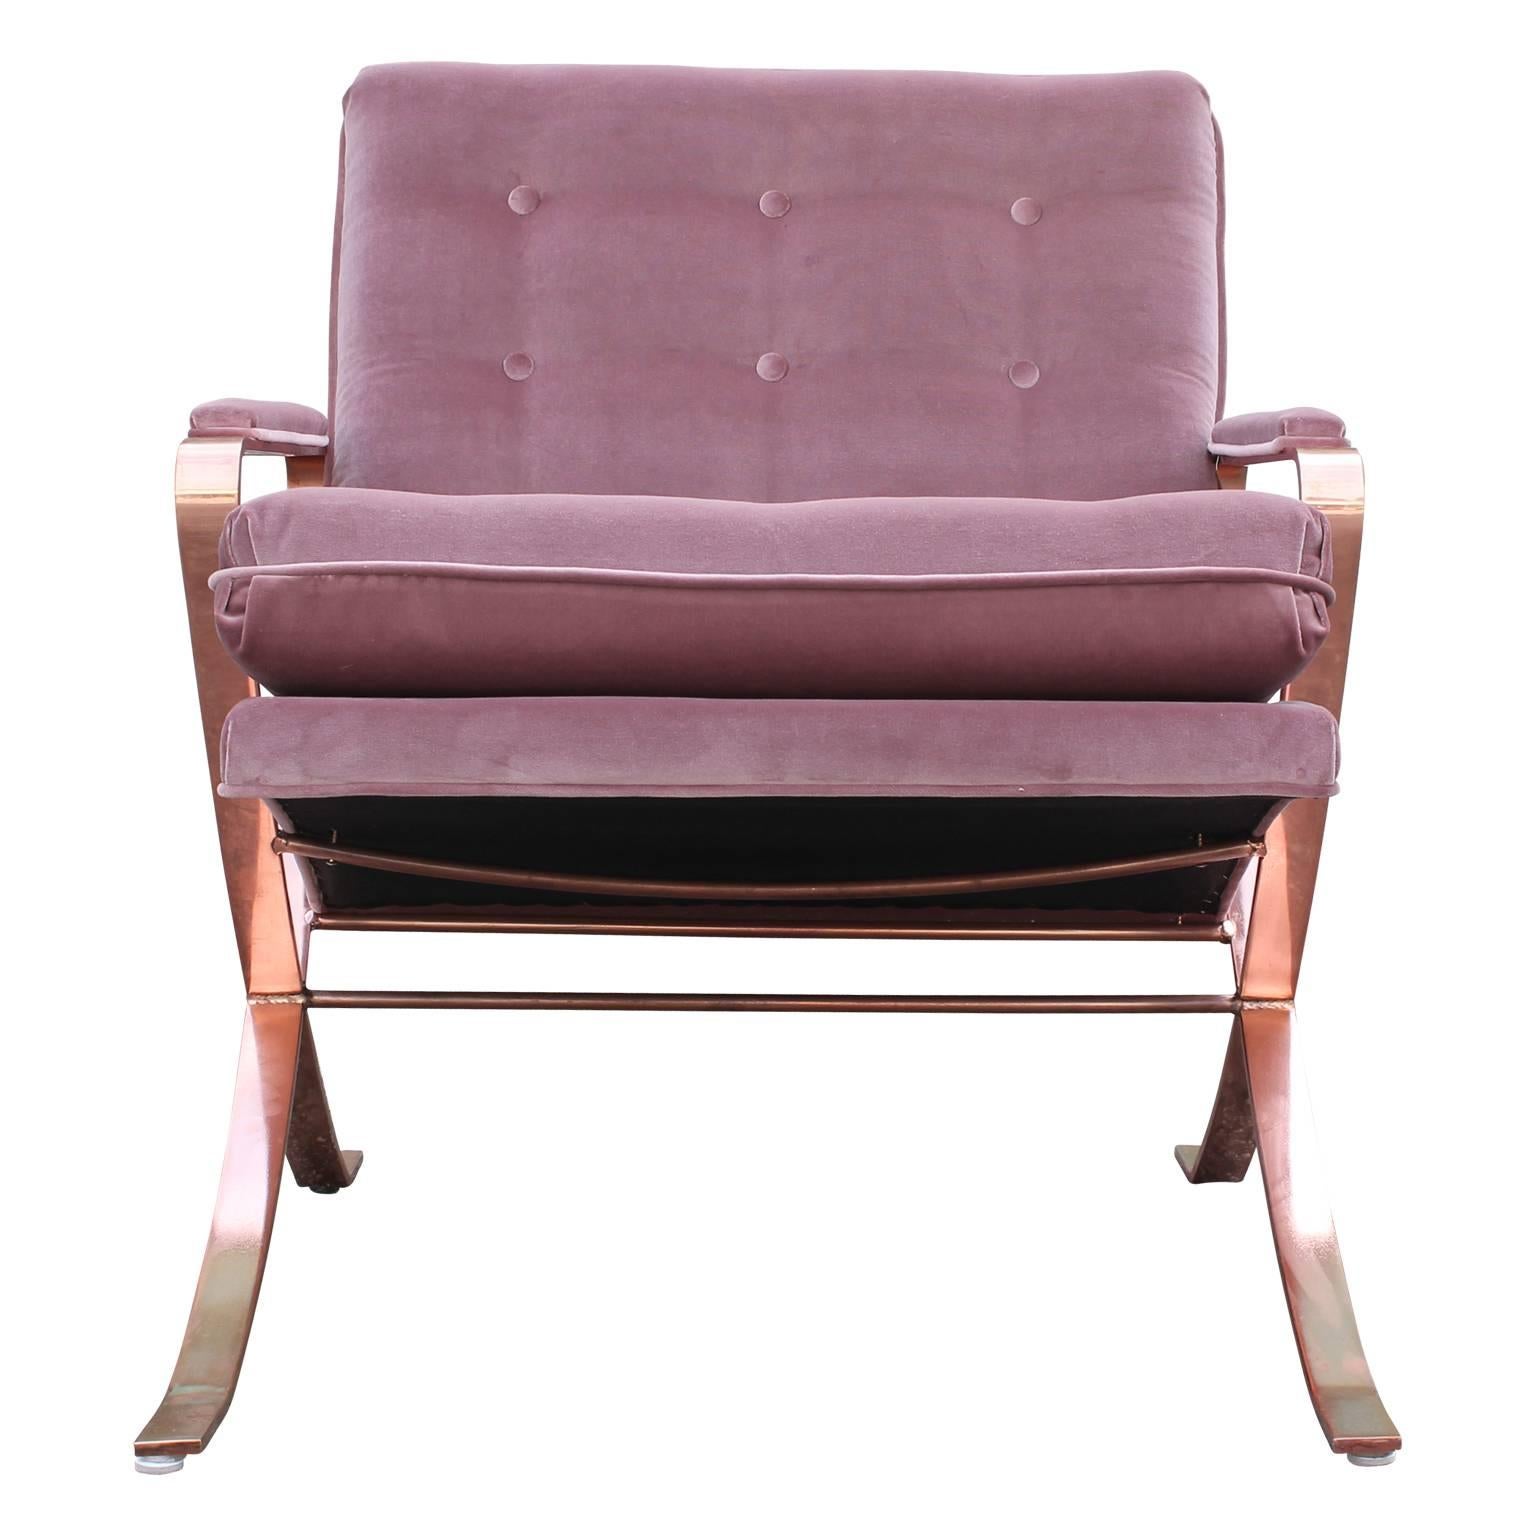 Mid-20th Century Pair of Modern Italian Copper-Plated Lounge Chairs in Tufted Mauve Kravet Velvet